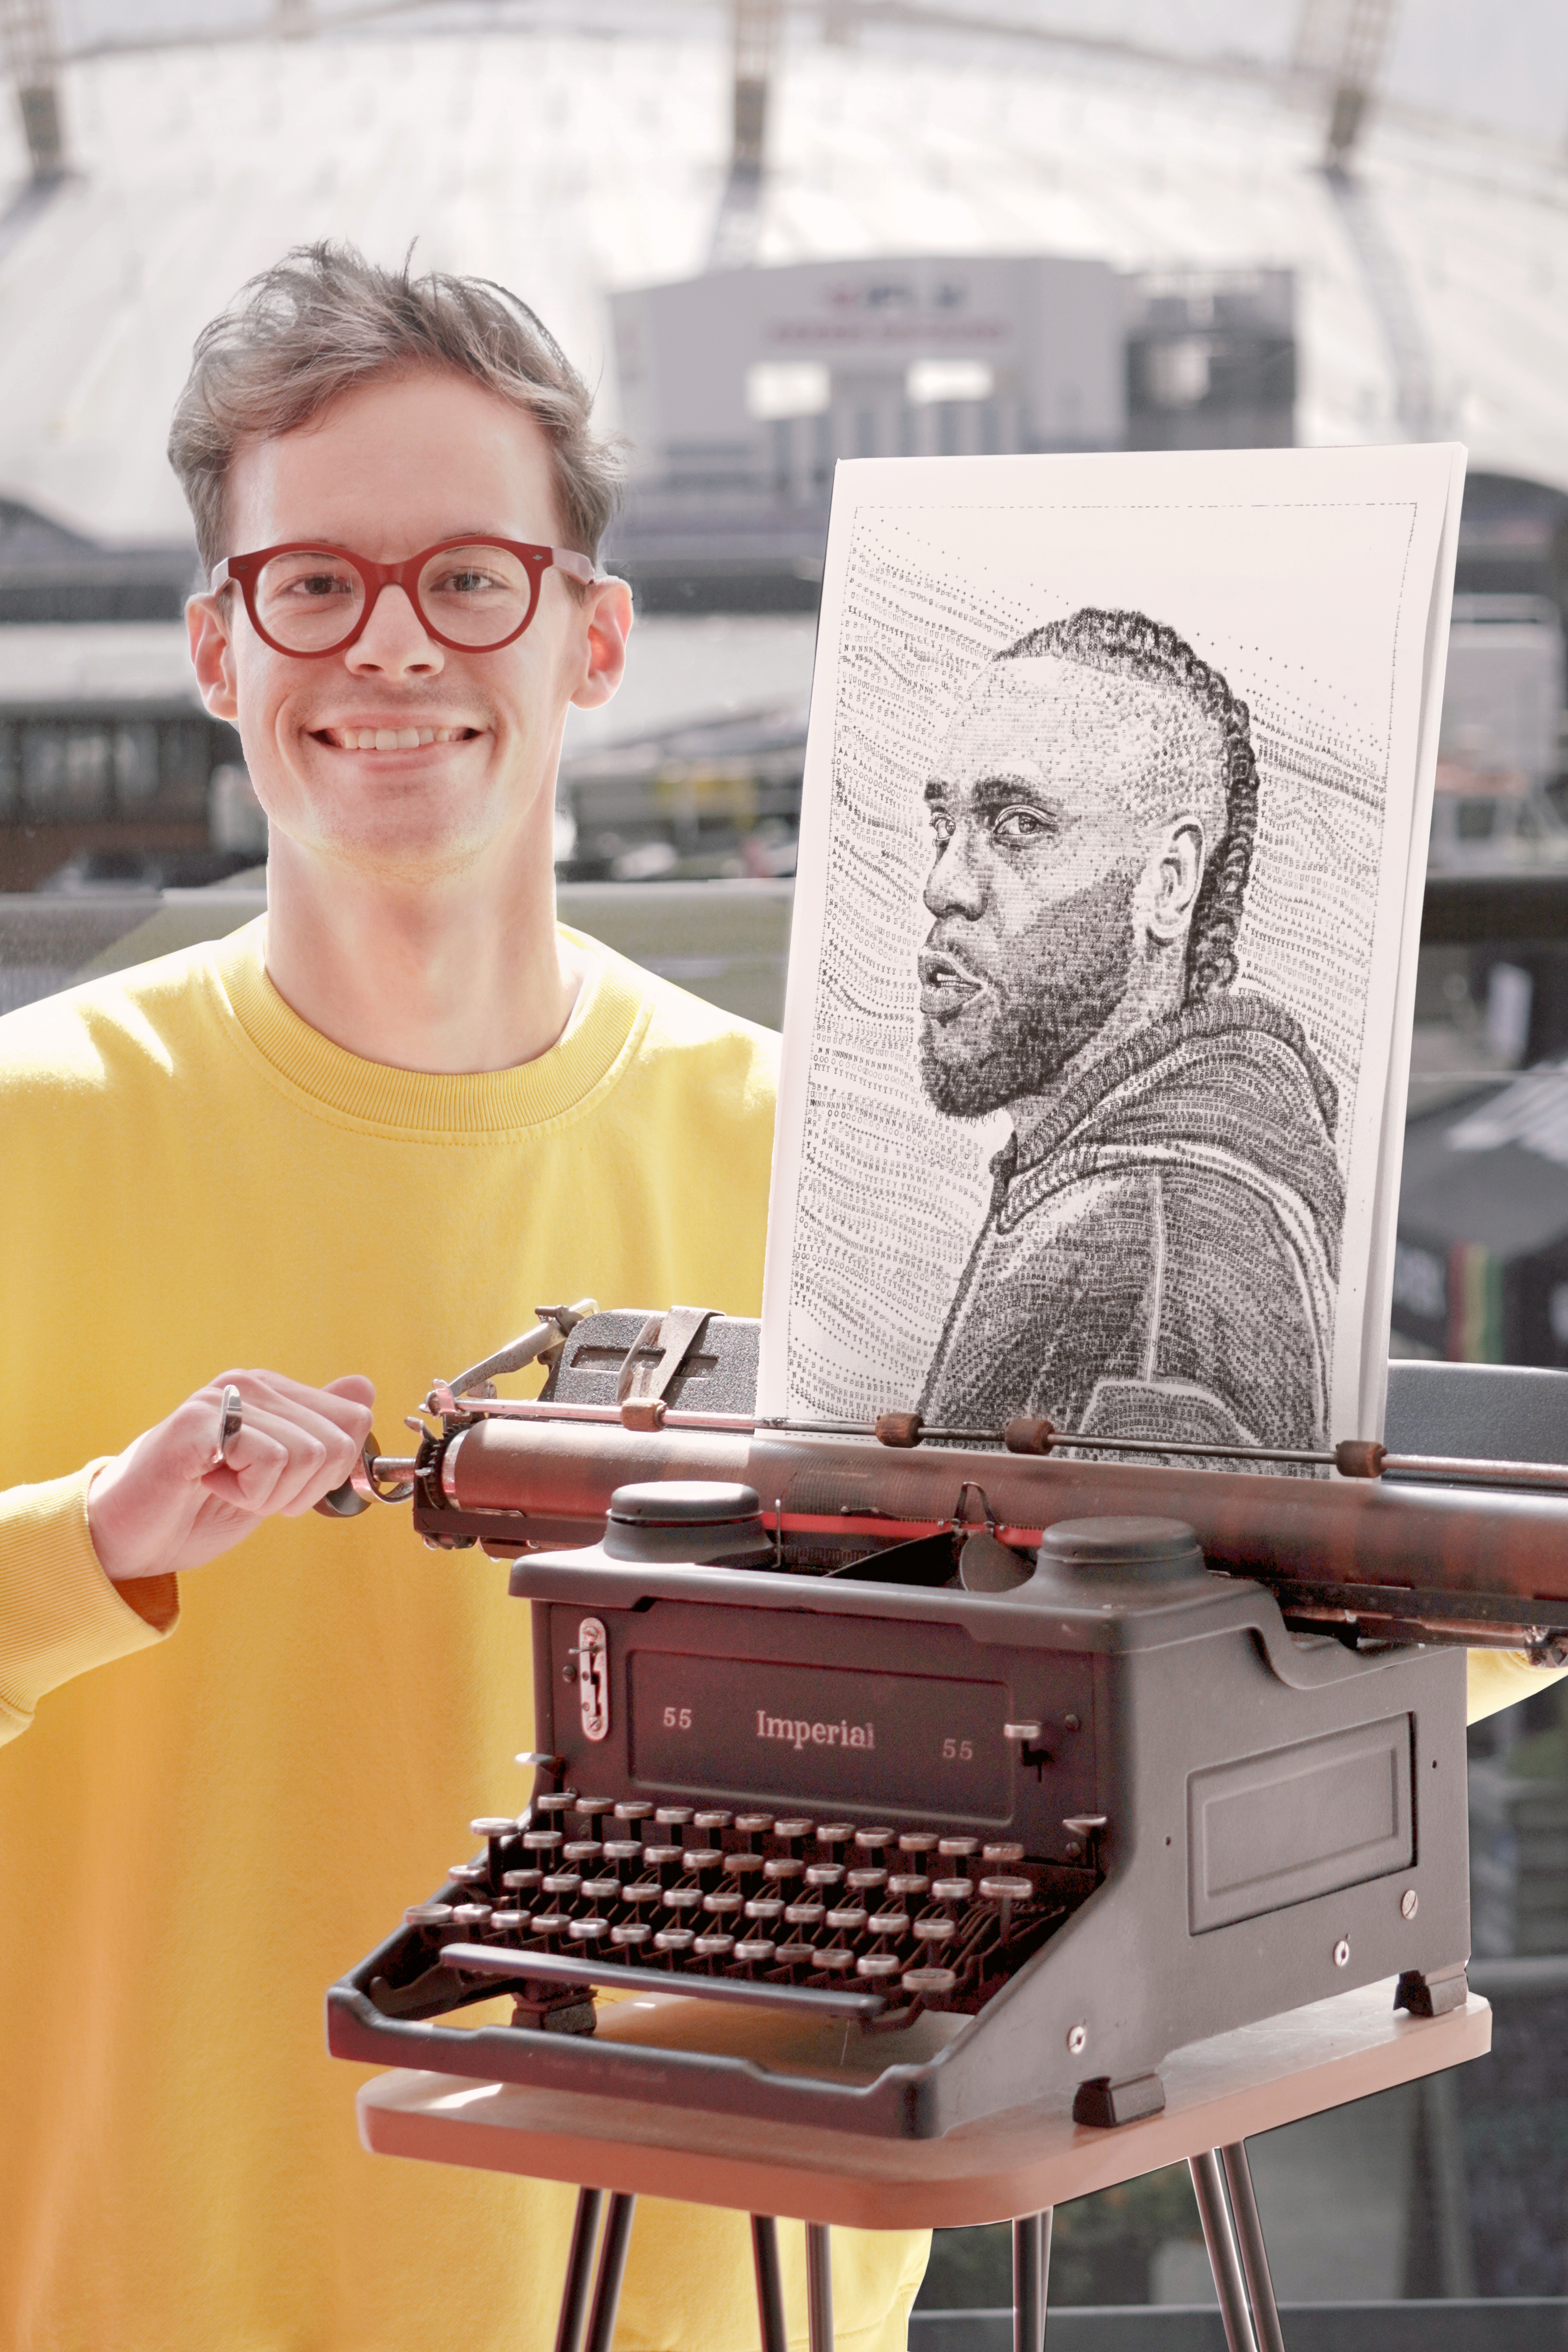 Man smiling at camera and standing next to a typewriter 